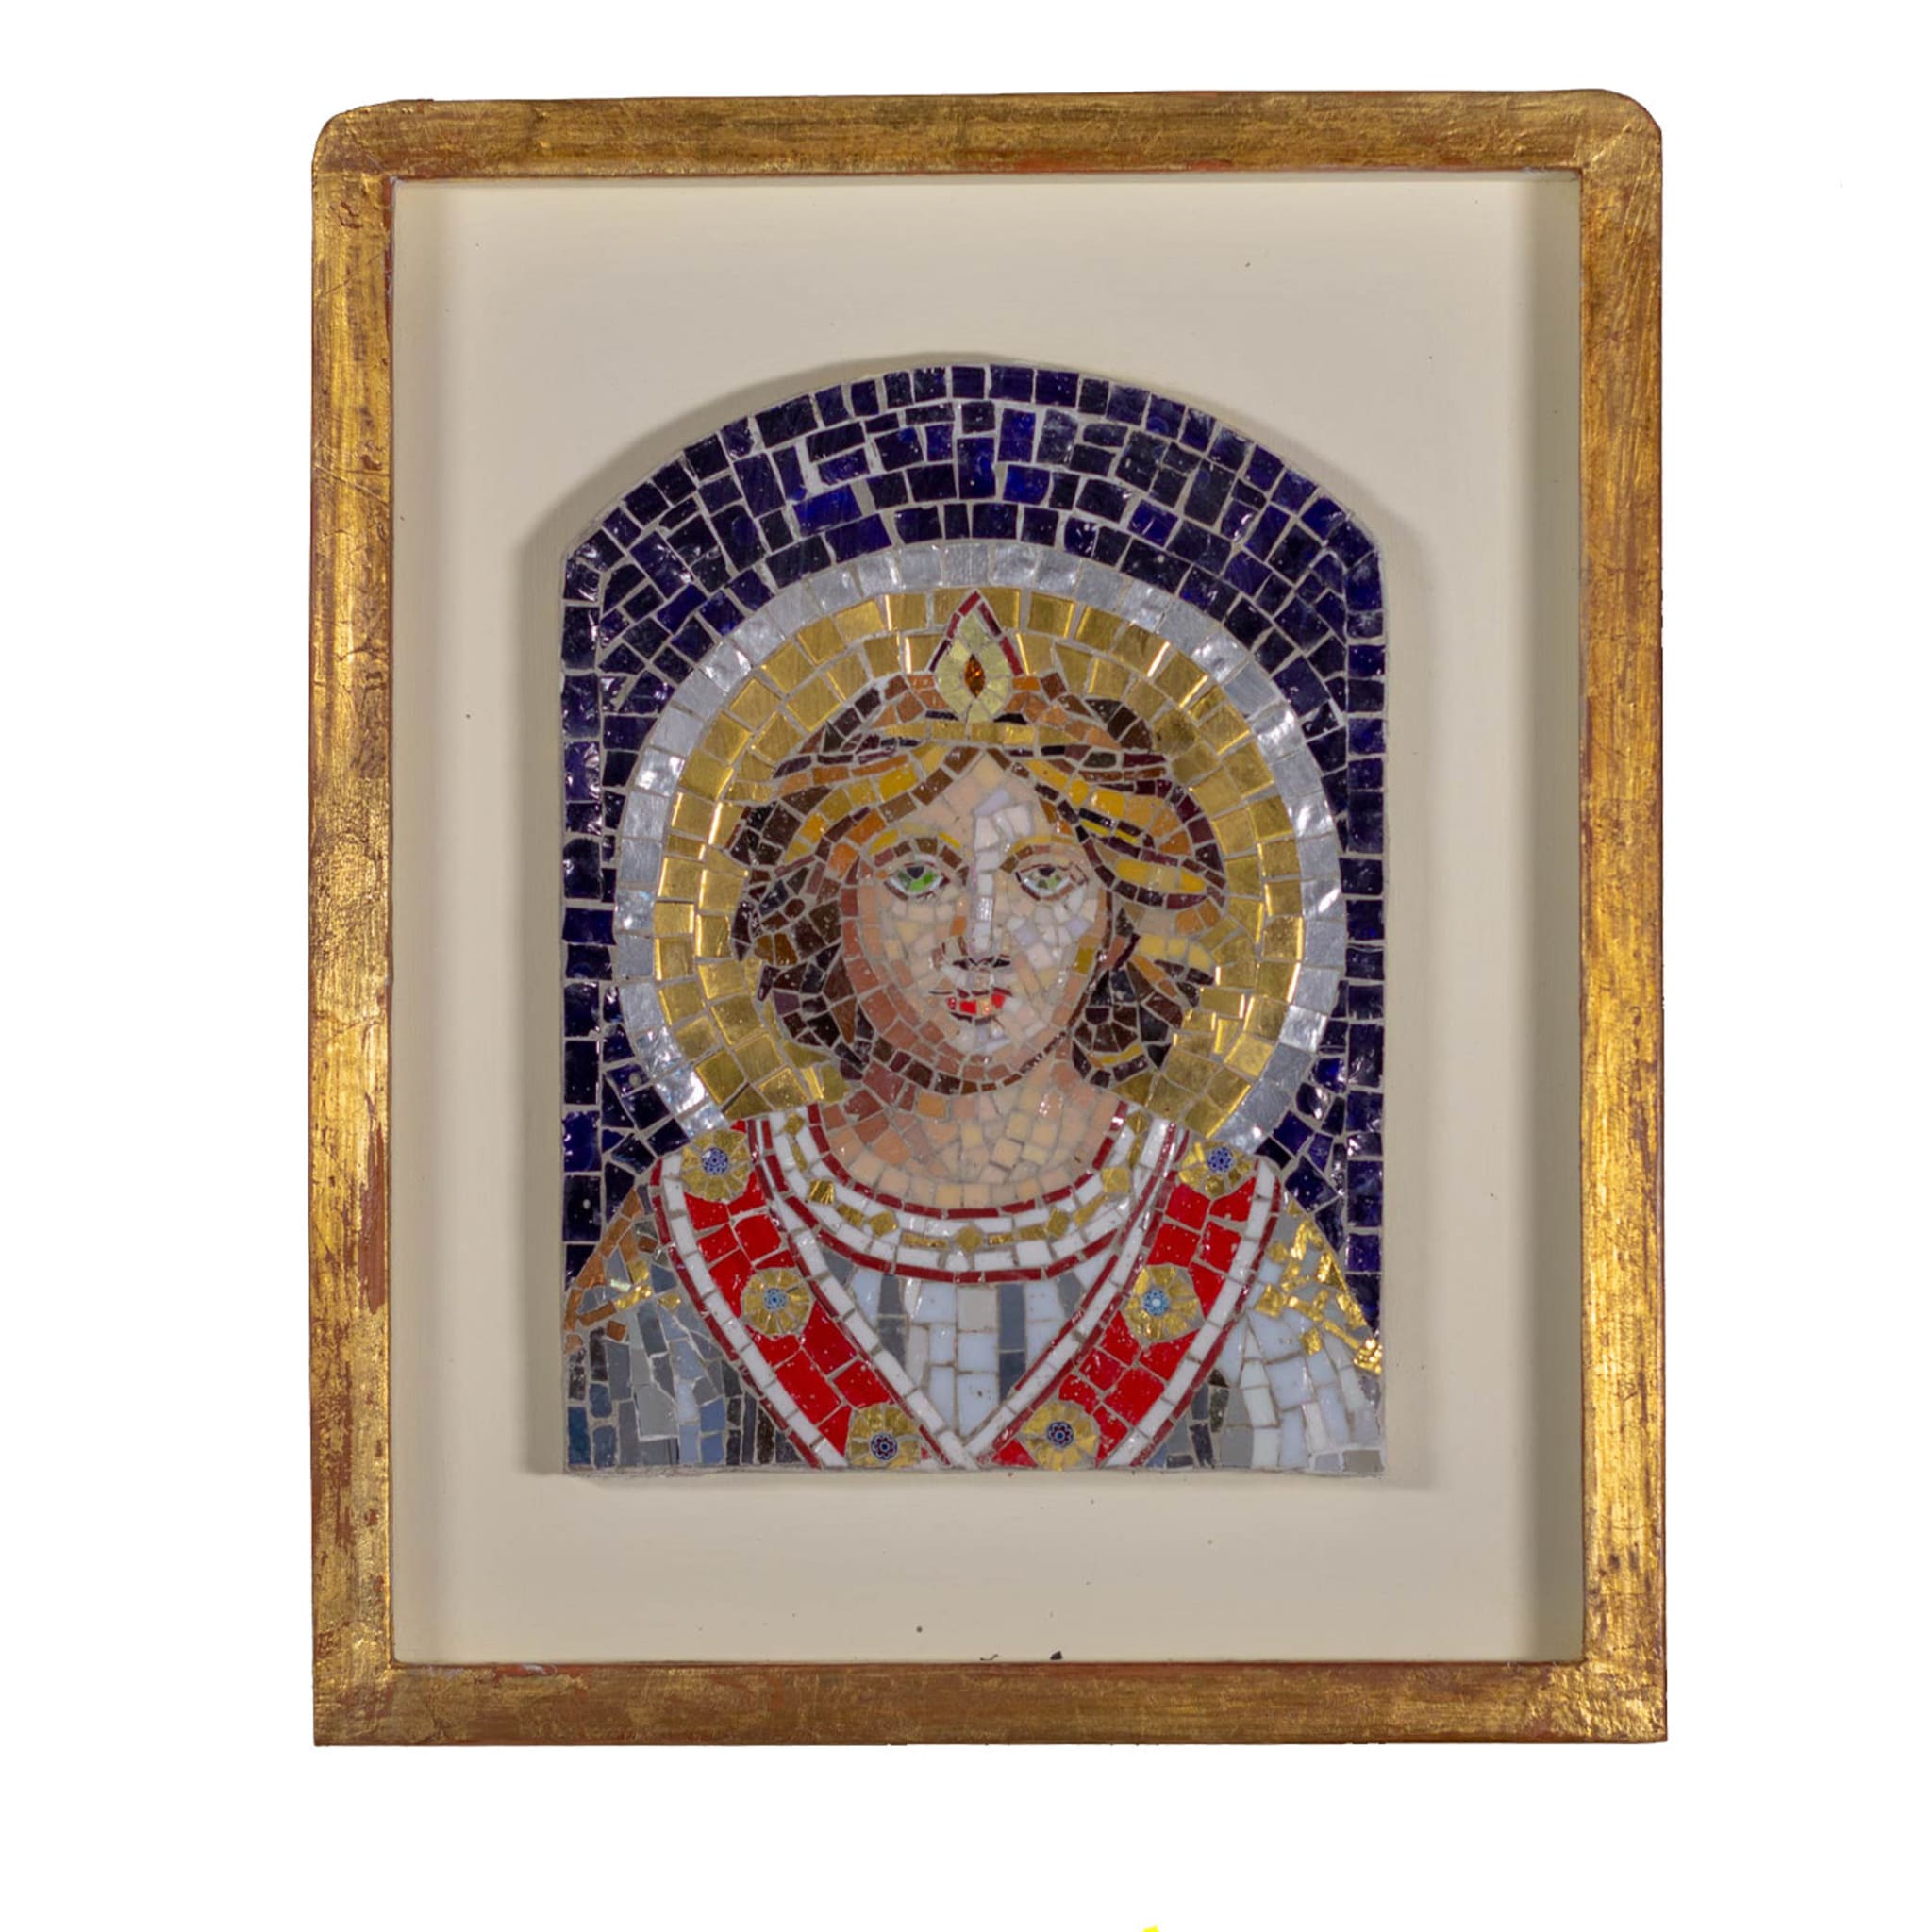 The Archangel Michael Mosaic - Main view